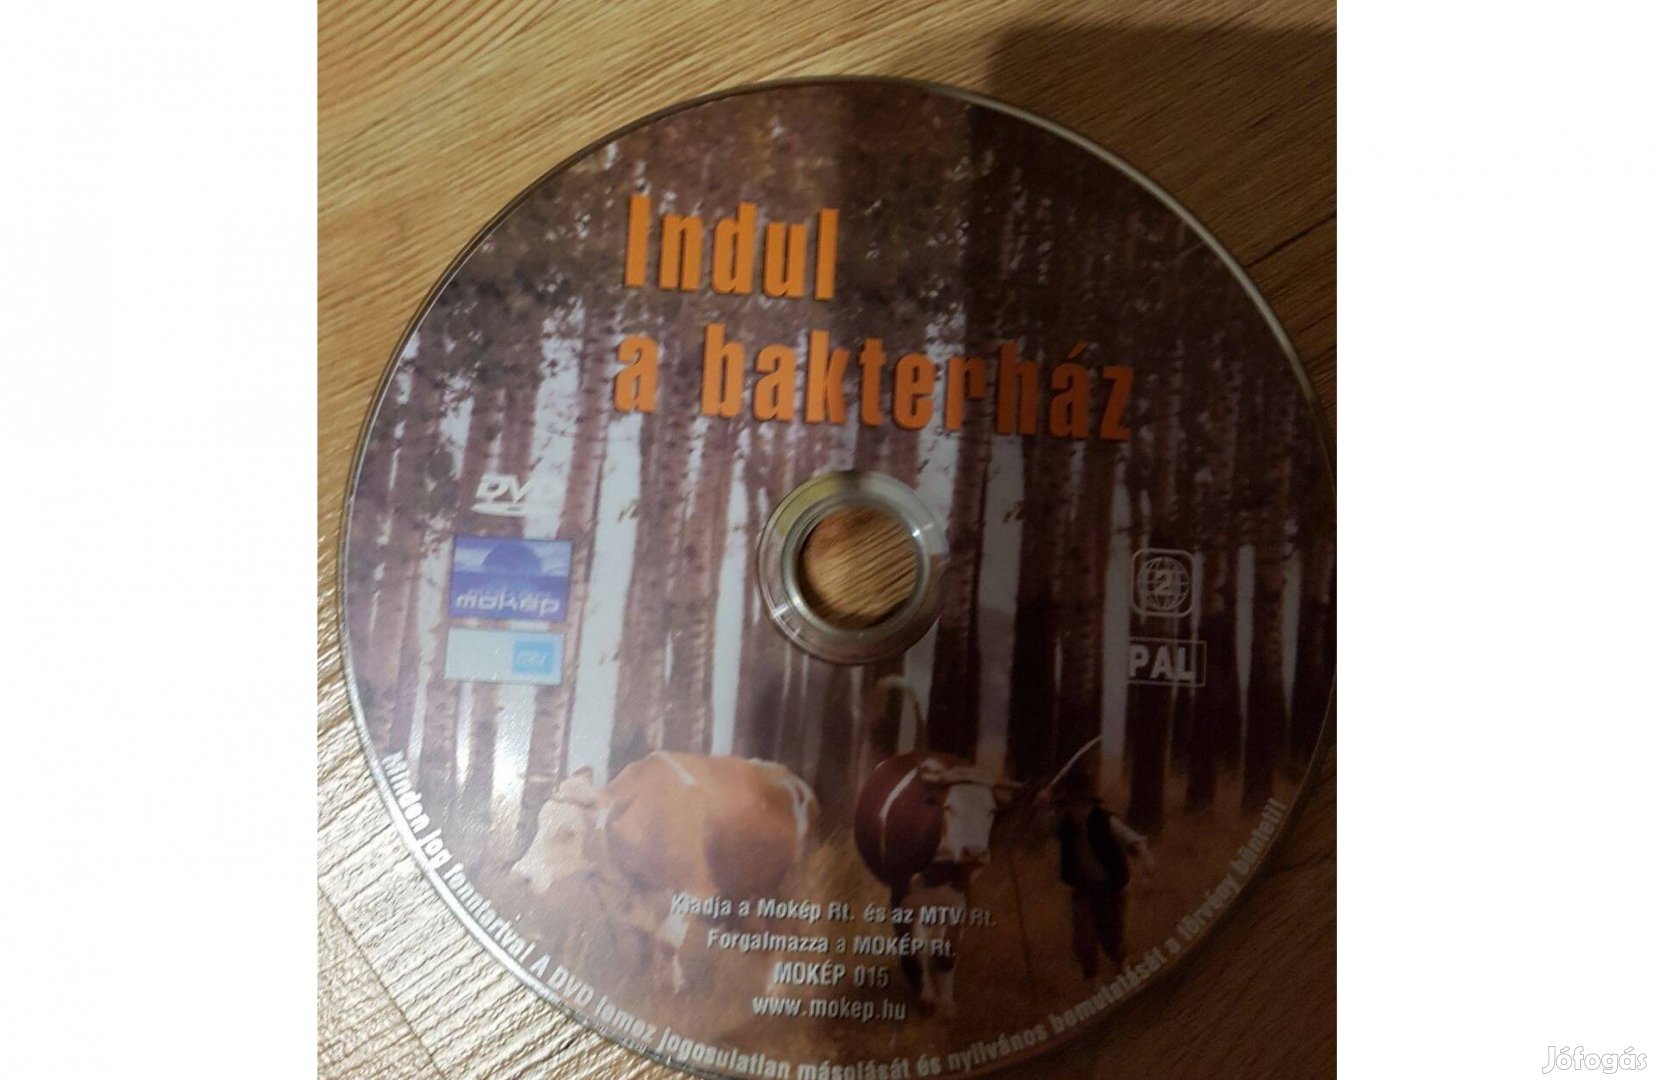 Indul a bakterház DVD